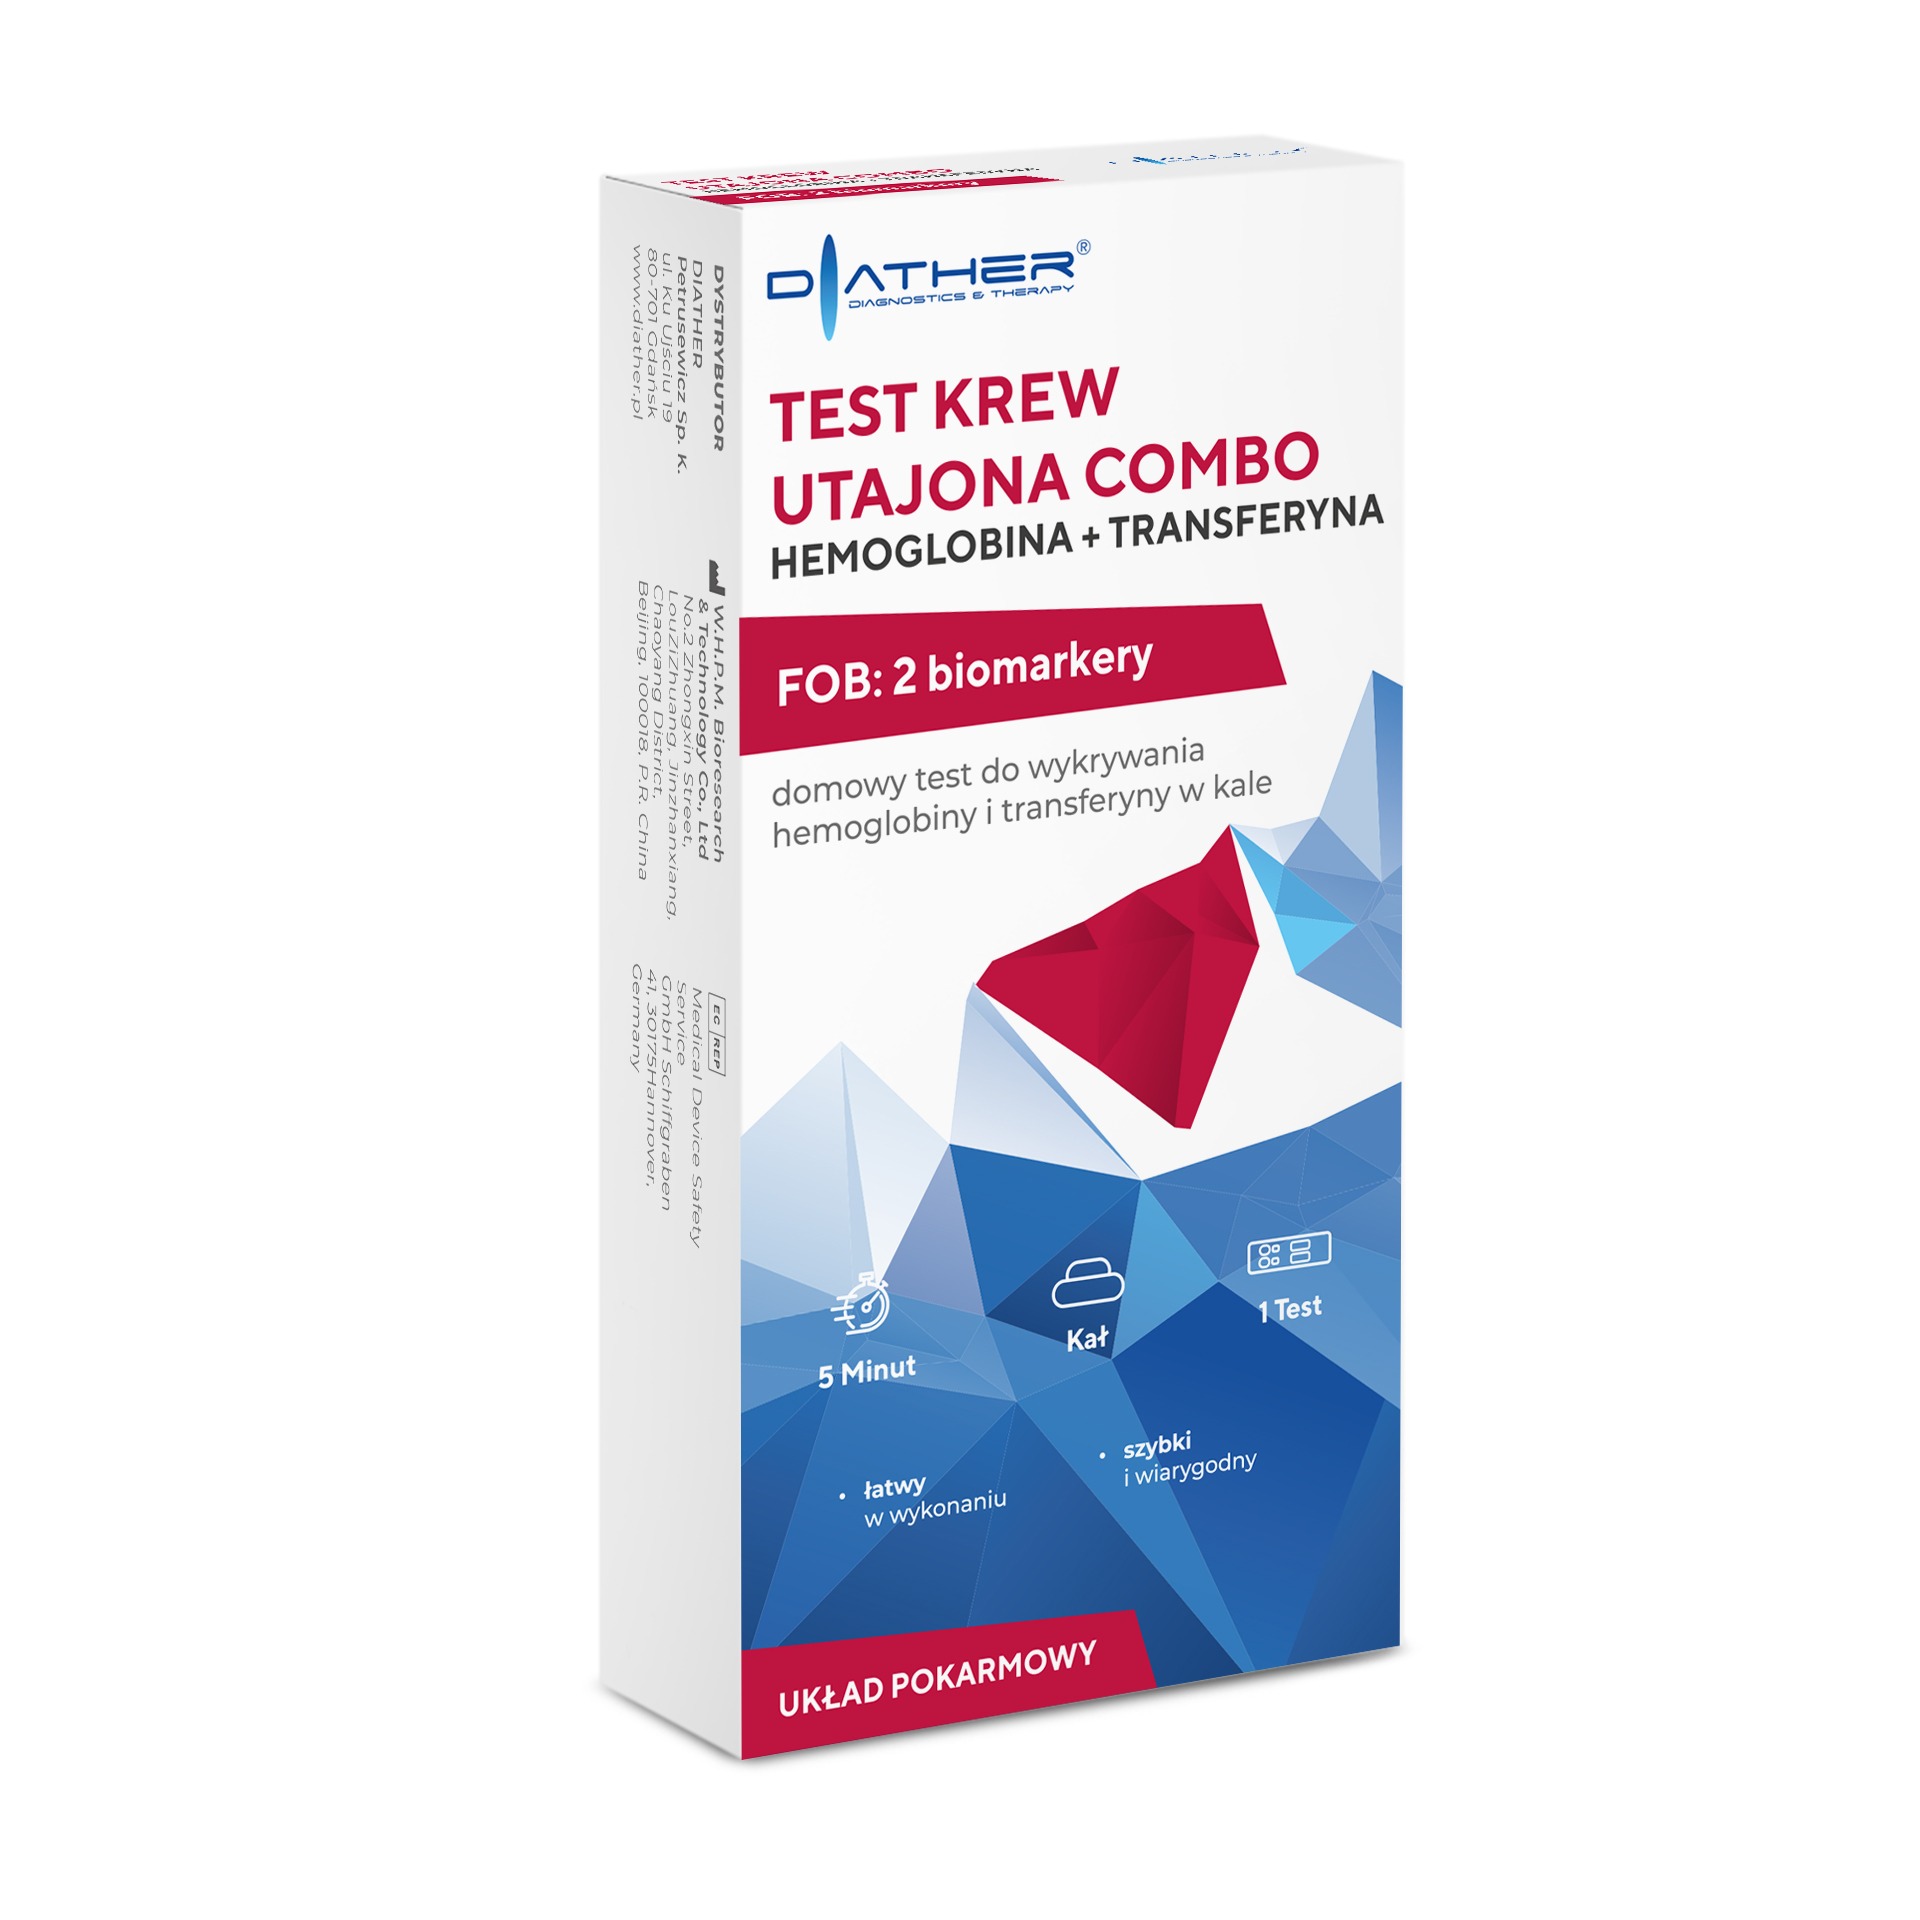 TEST KREW UTAJONA COMBO  HEMOGLOBINA + TRANSFERYNA